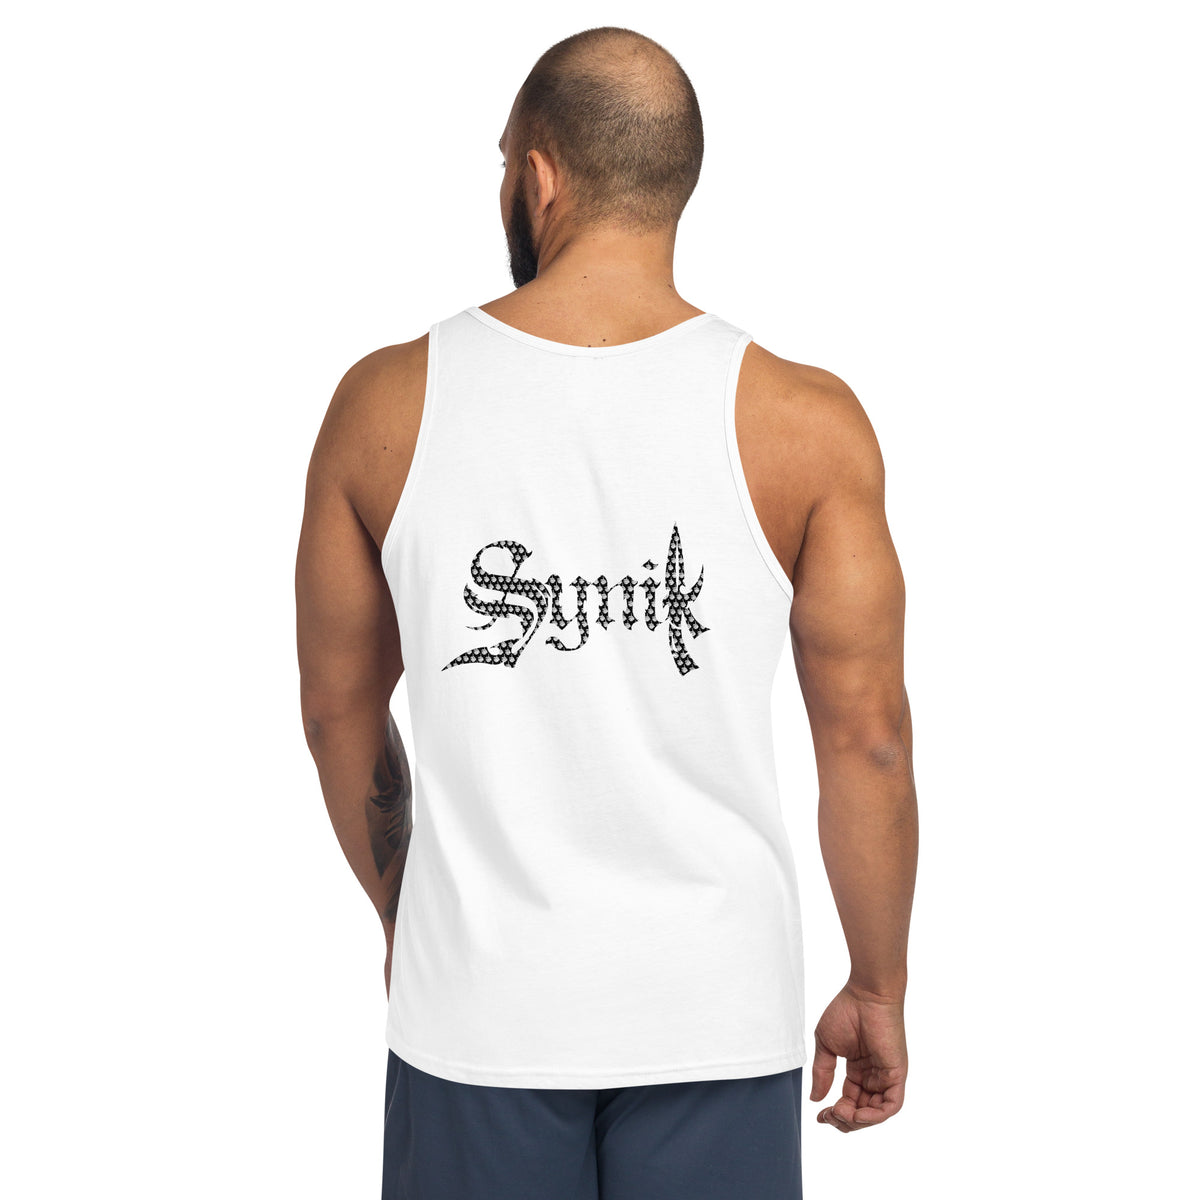 SYNIK REBEL LUX PREMIUM TANK TOP - TANK TOP - Synik Clothing - synikclothing.com